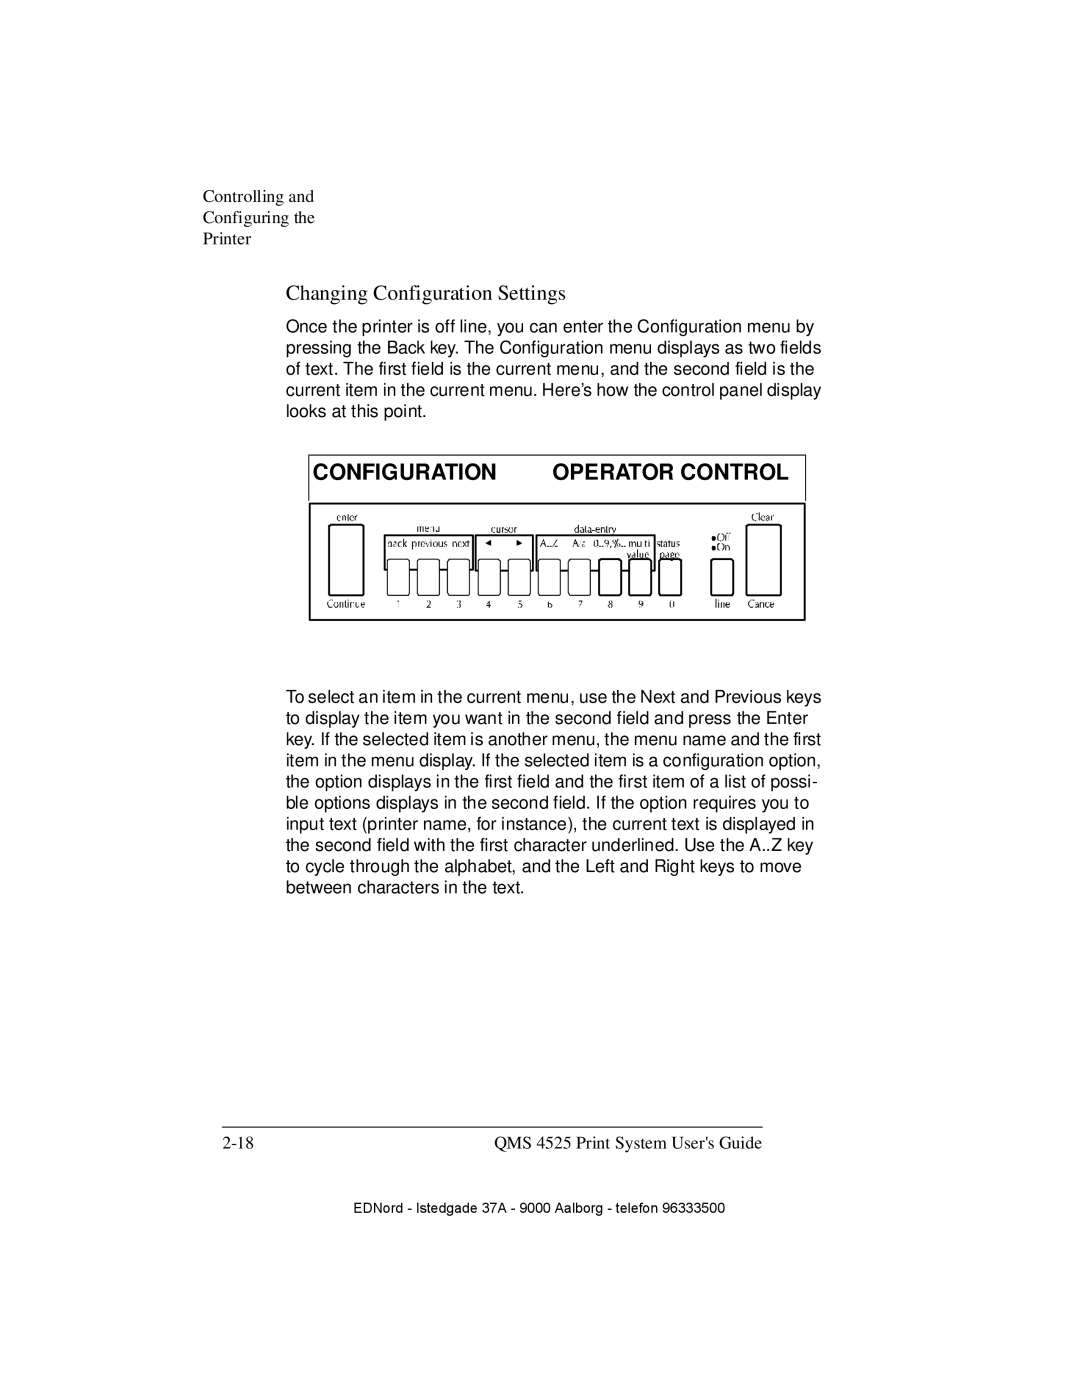 IBM QMS 4525 manual Changing Configuration Settings, Operator Control 